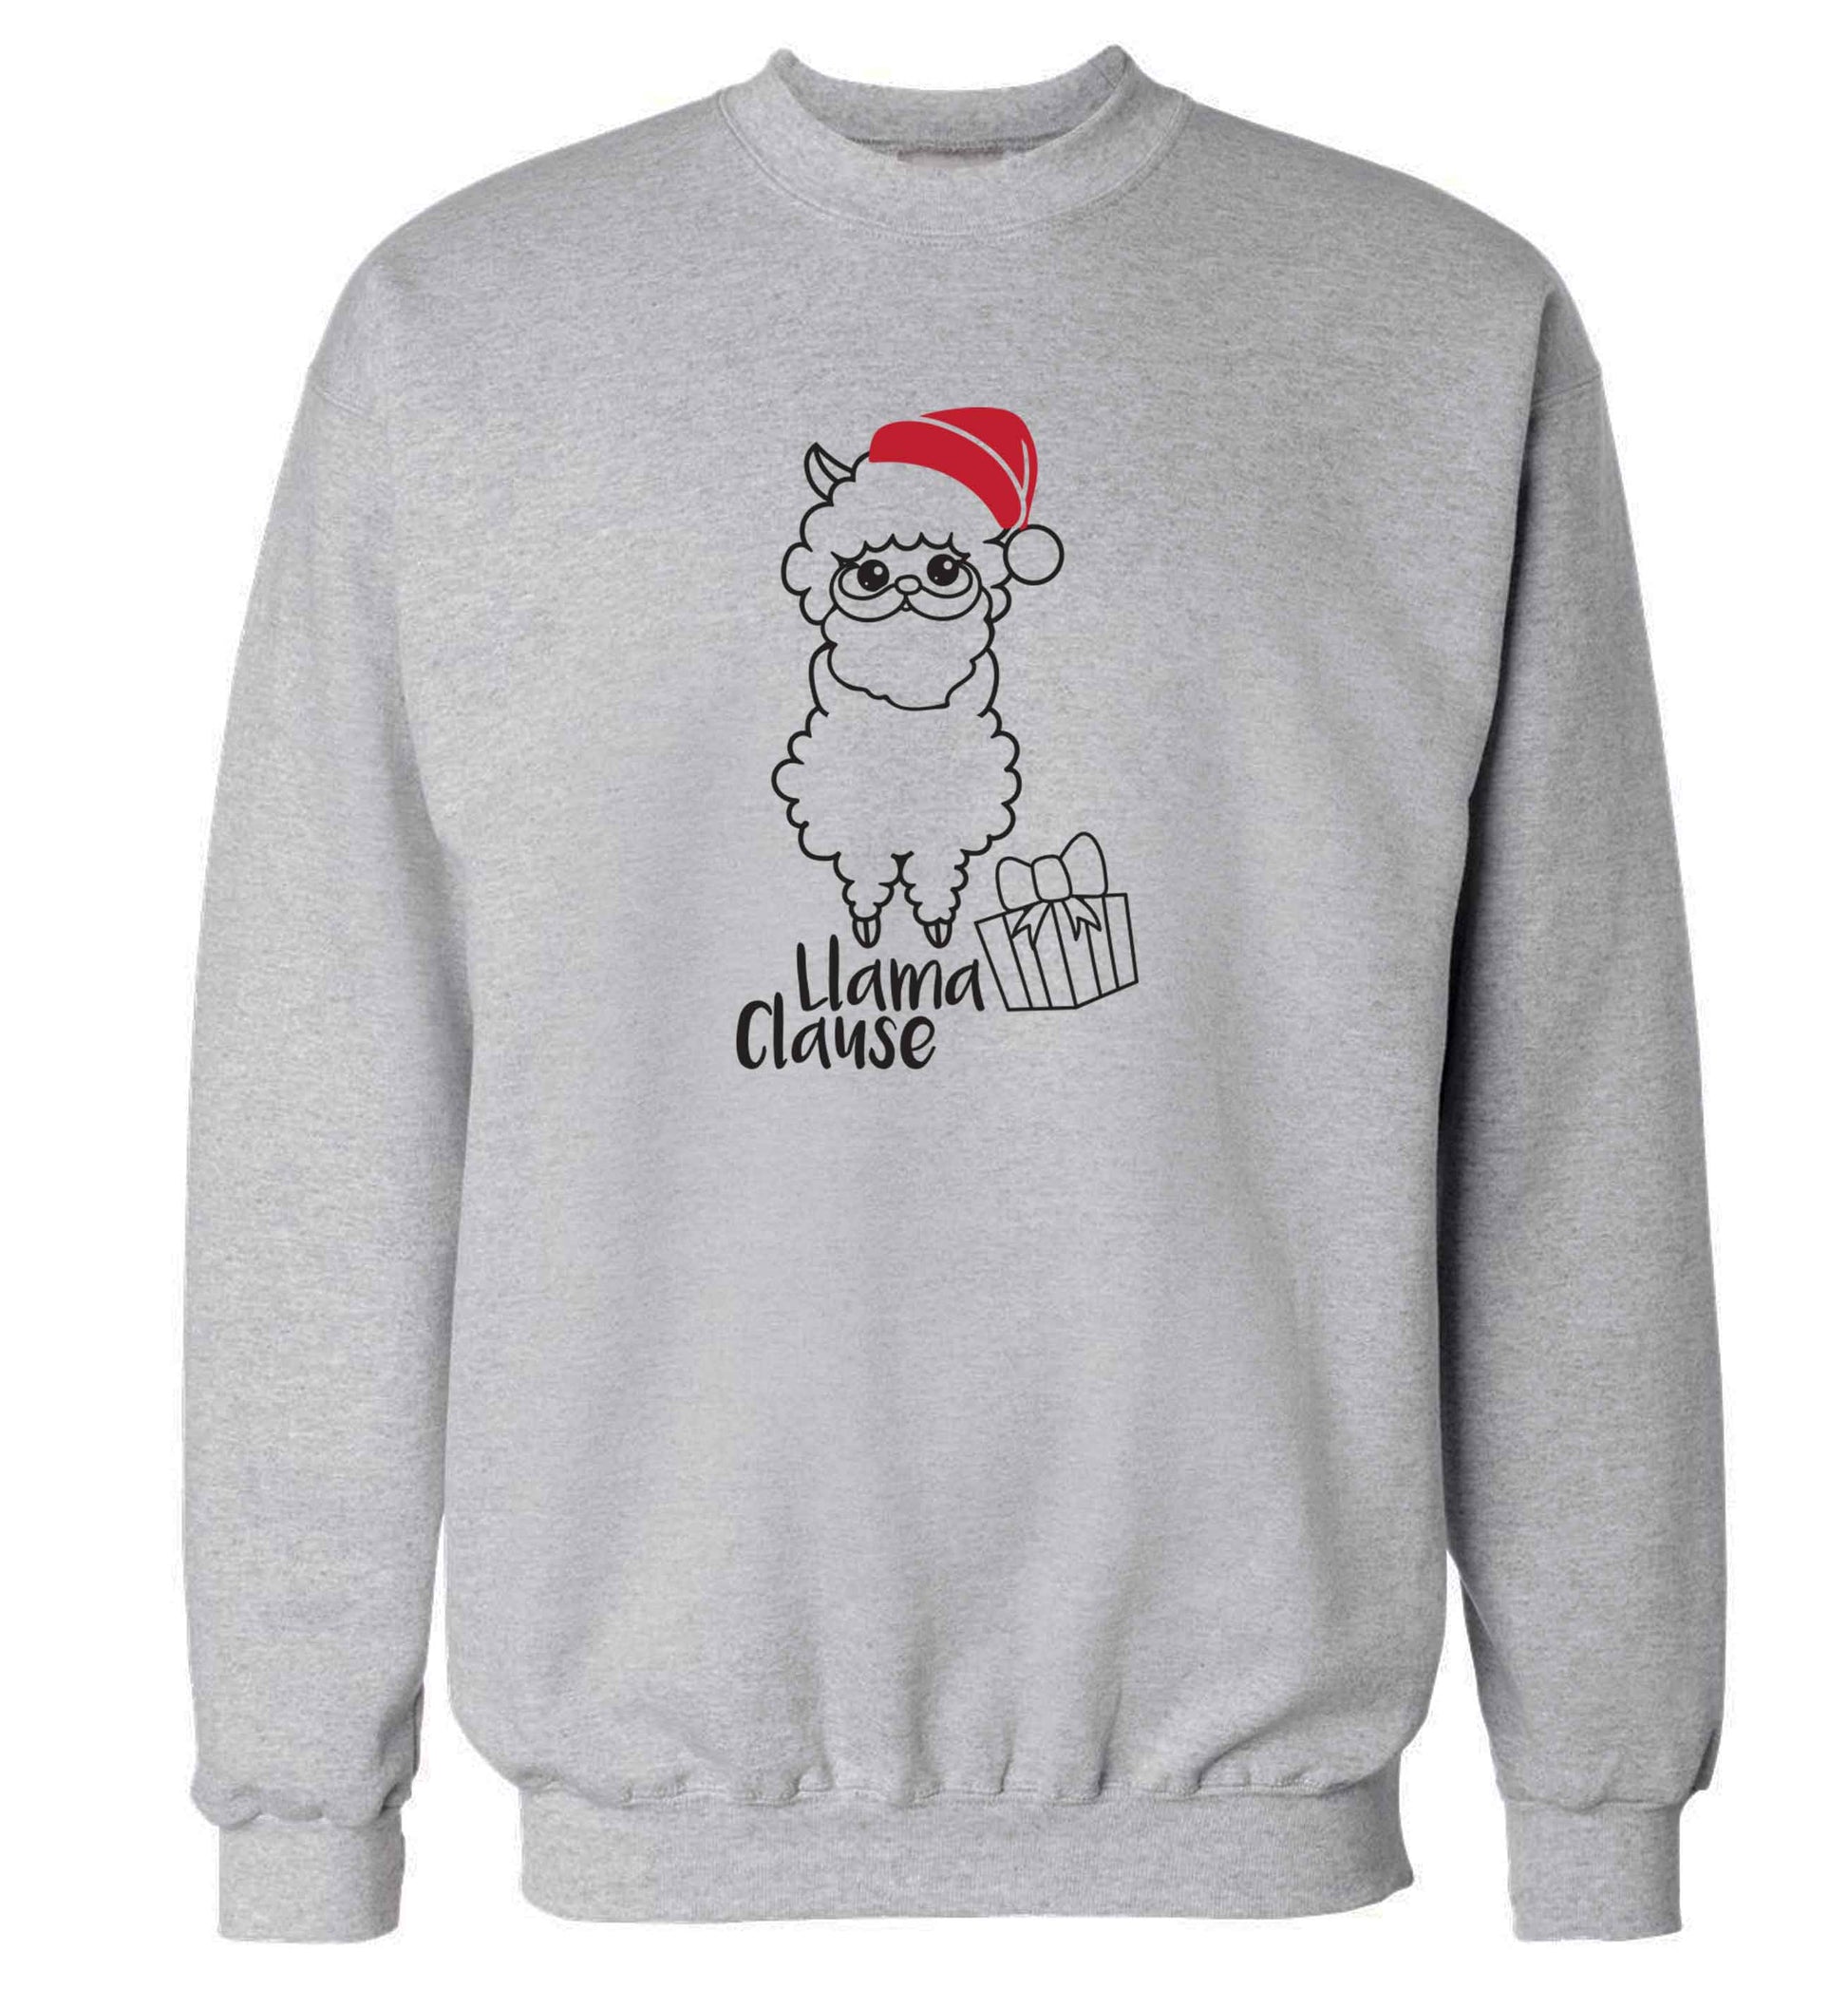 Llama Clause adult's unisex grey sweater 2XL